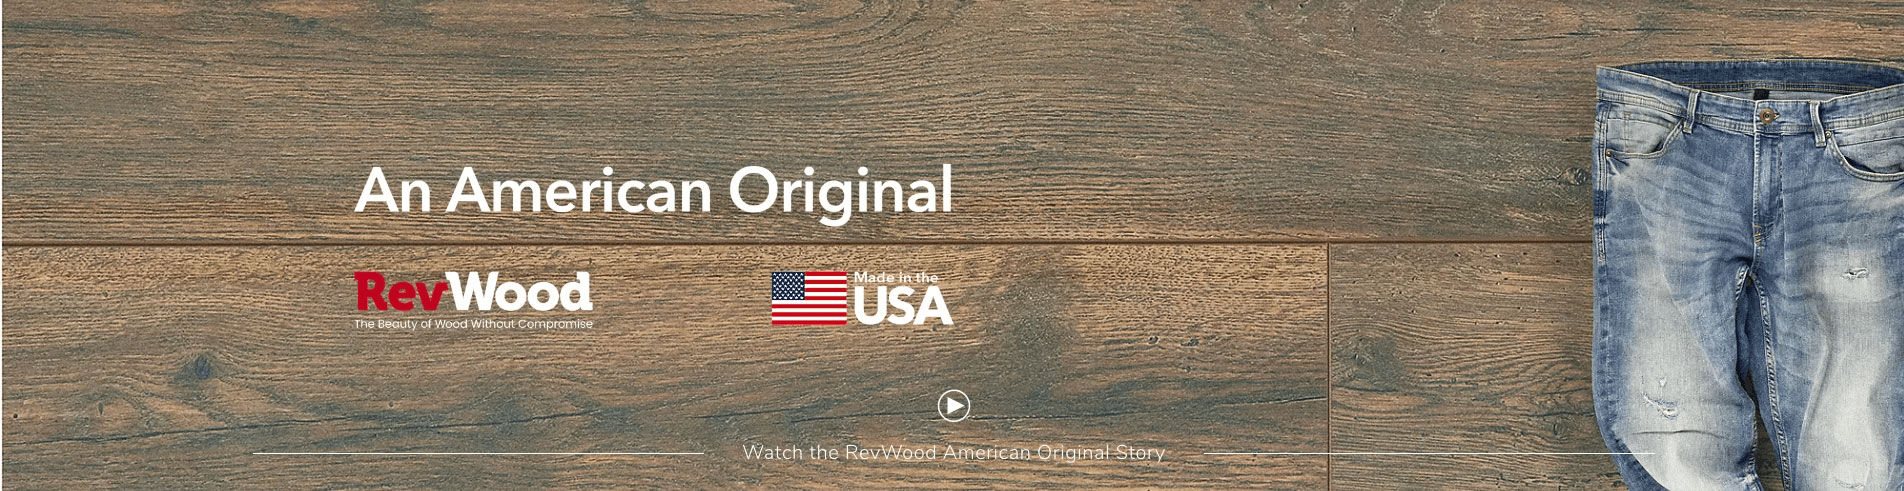 An american original | Henson's Greater Tennessee Flooring